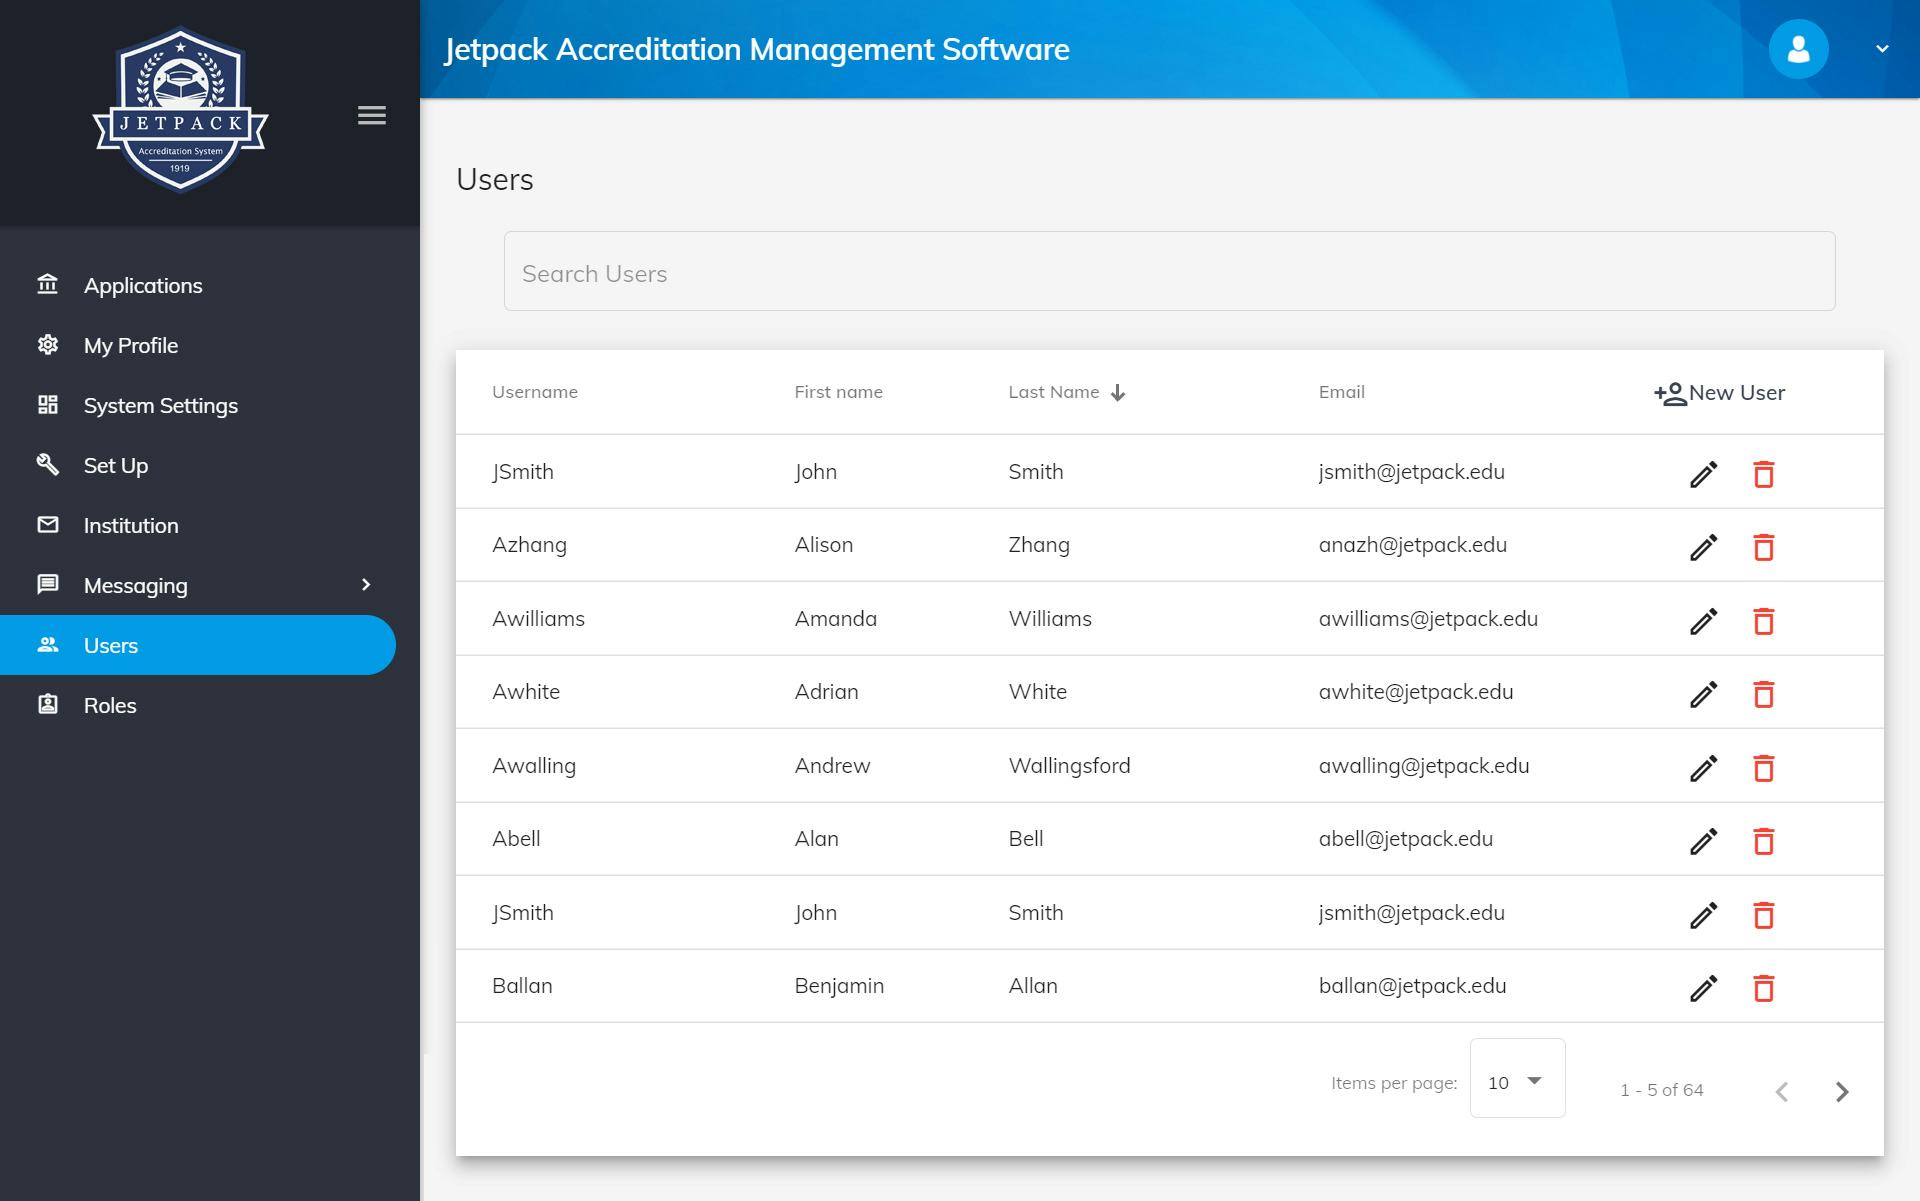 Jetpack Accreditation Management Software - Jetpack Accreditation Management user permissions